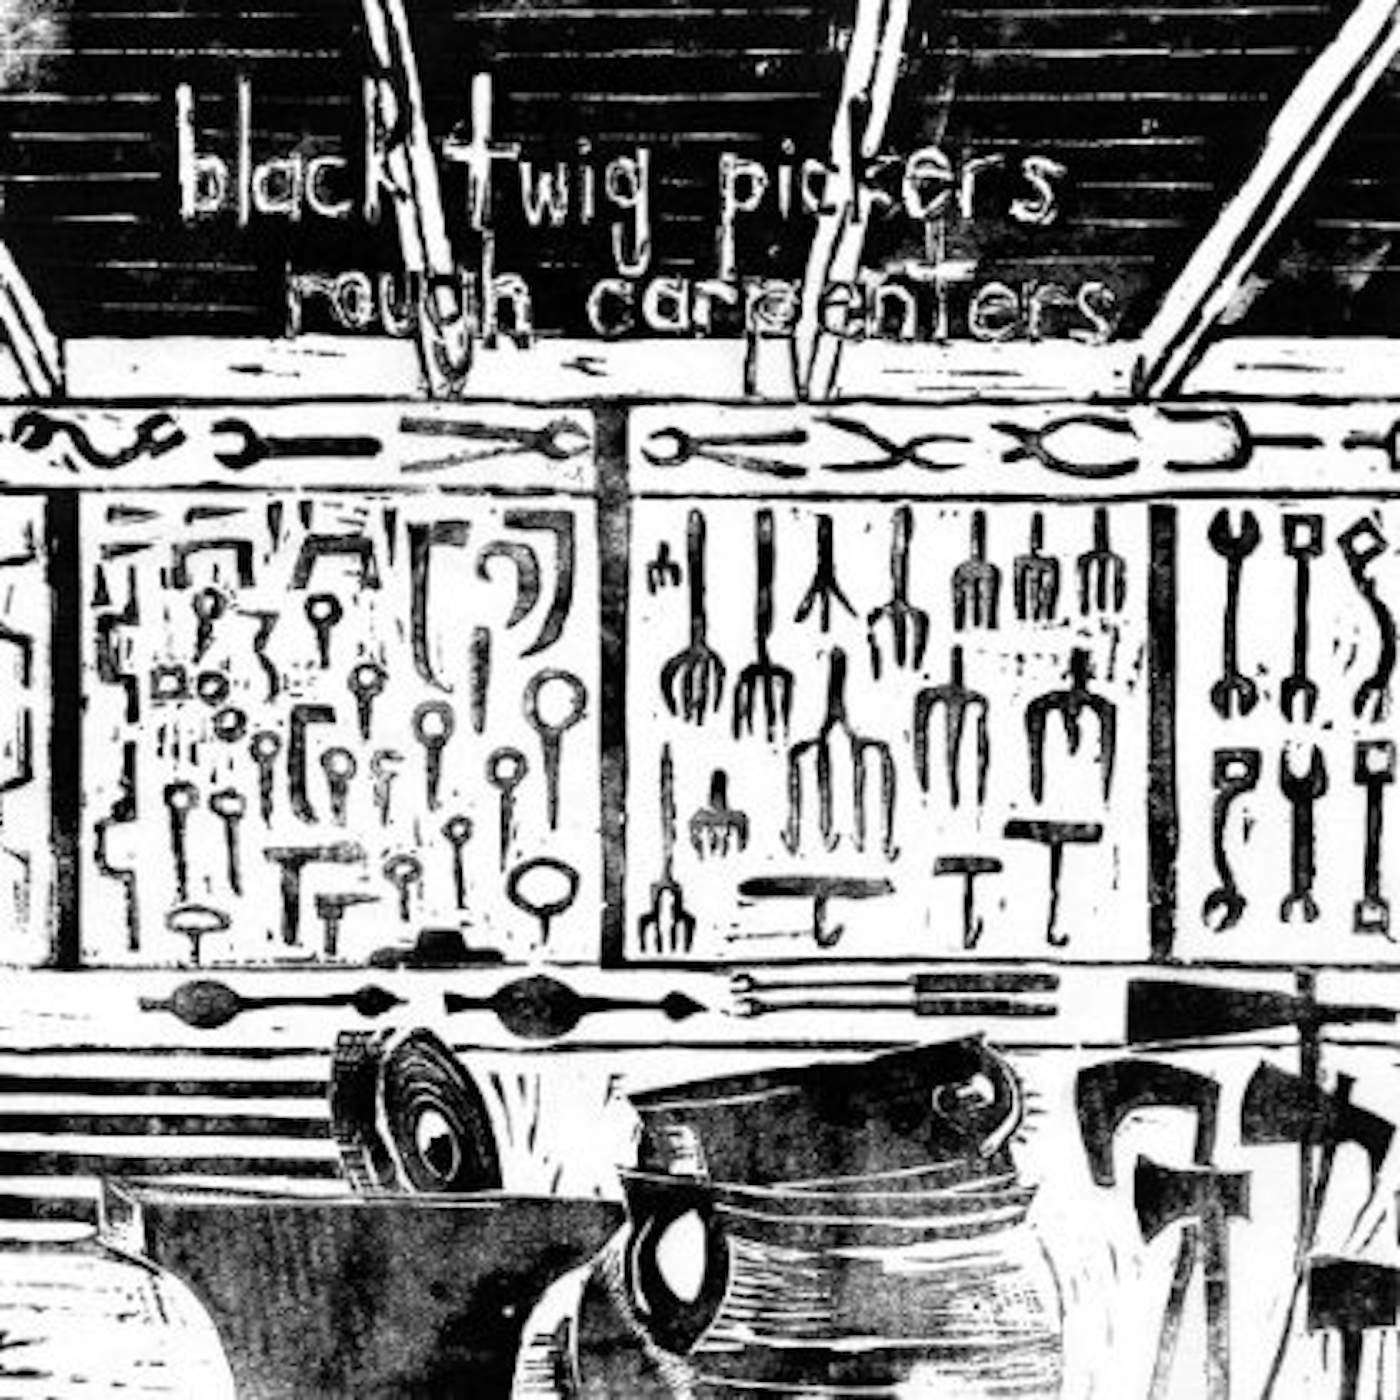 Black Twig Pickers ROUGH CARPENTERS CD